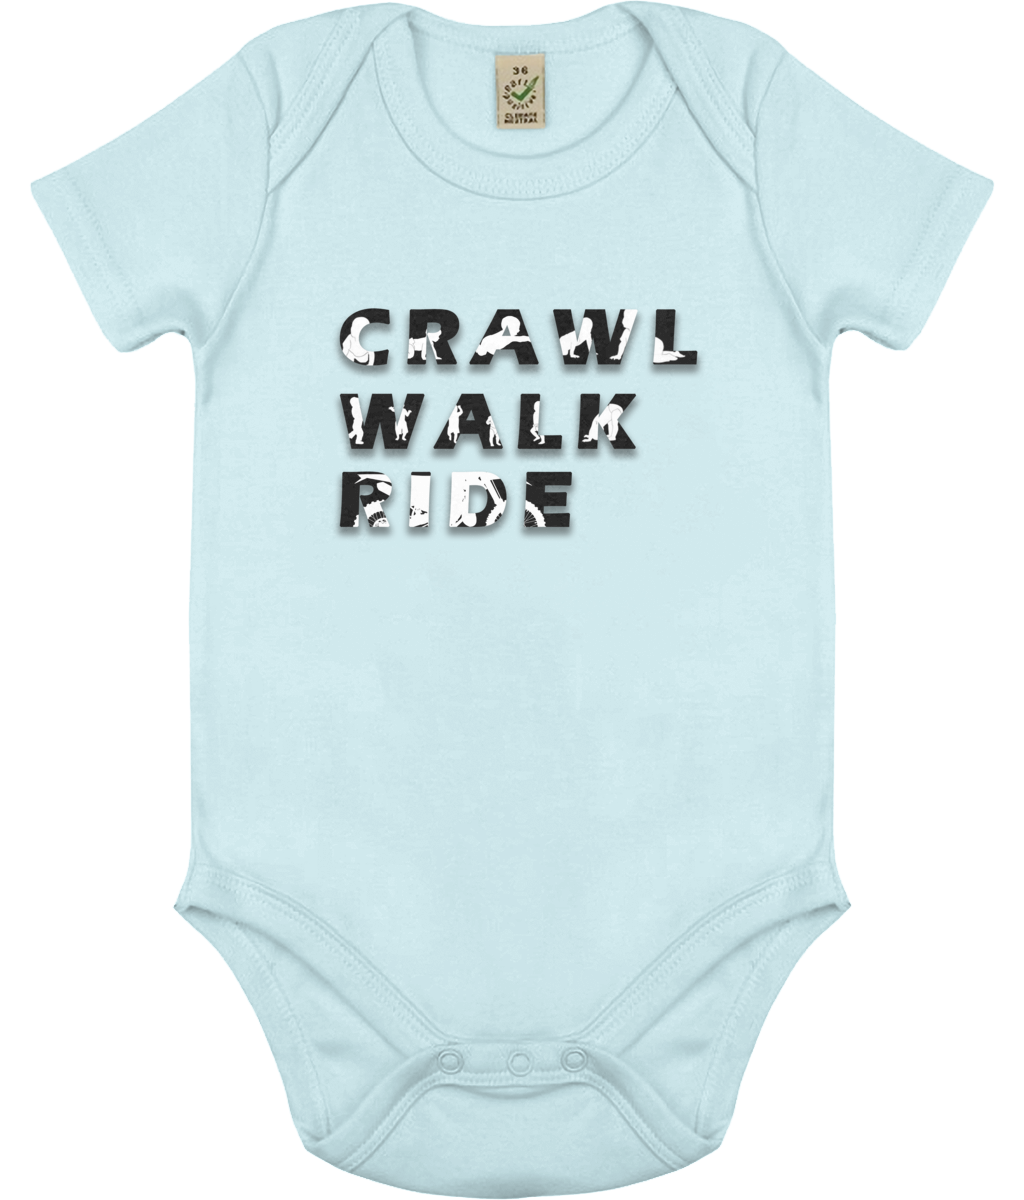 Crawl Walk Ride - Baby Grow 100% Cotton